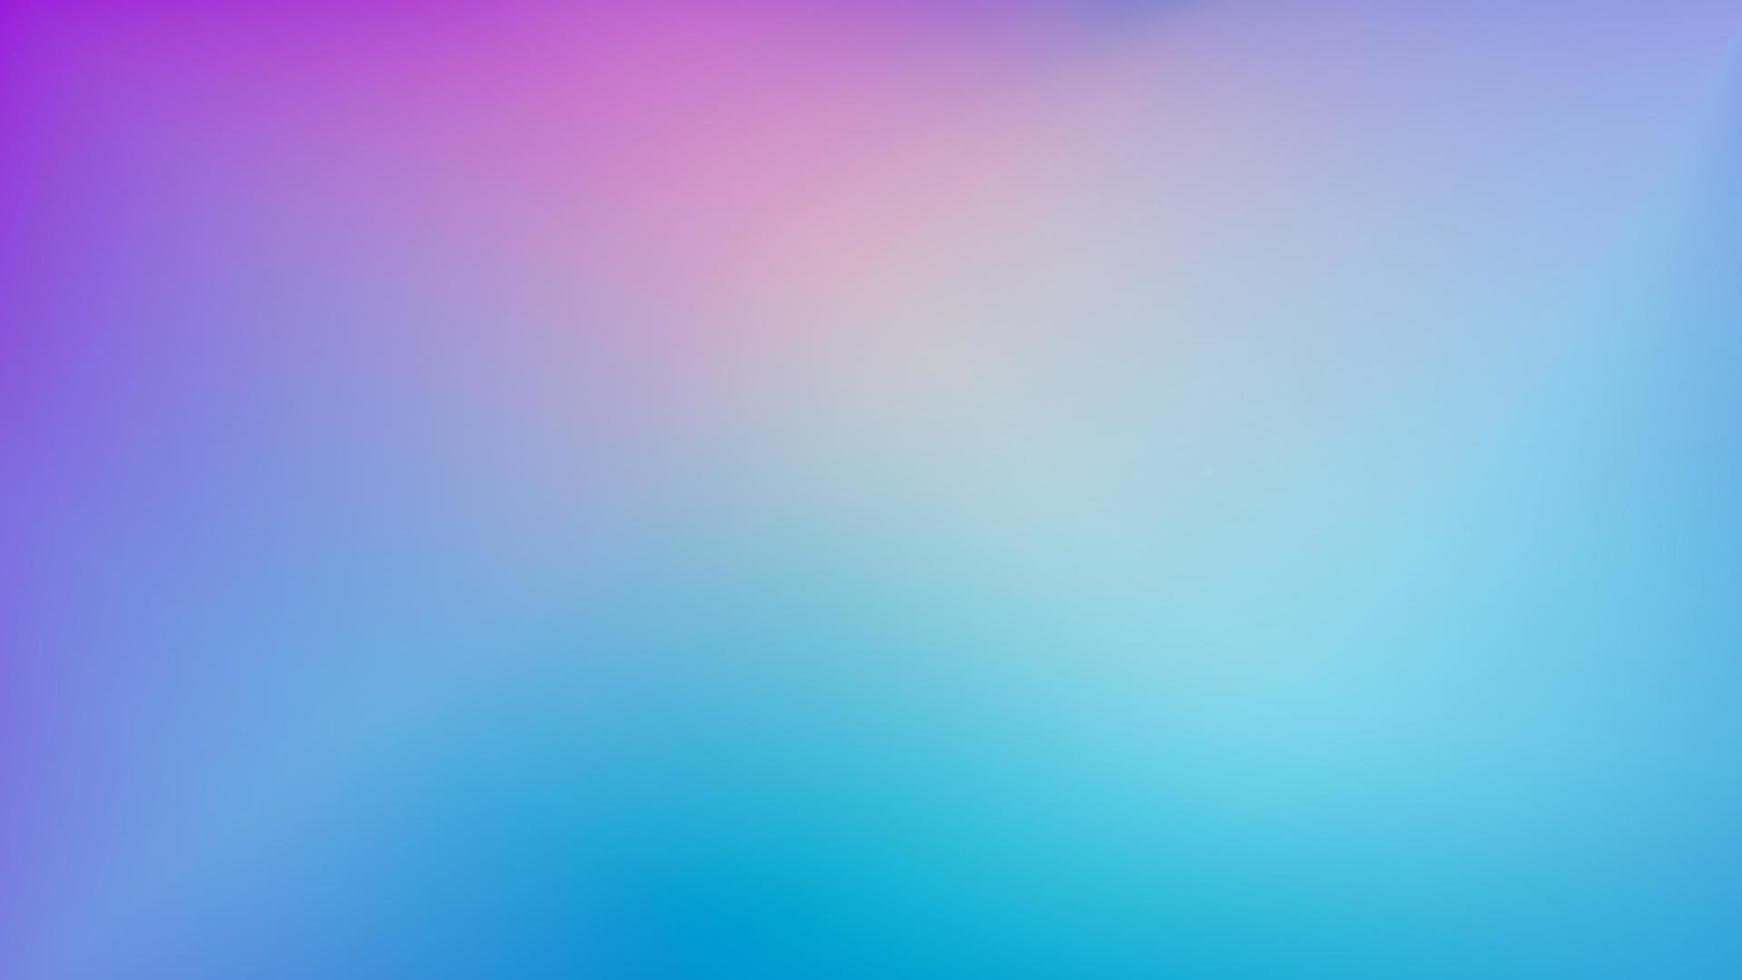 Blue purple gradient defocused abstract background vector